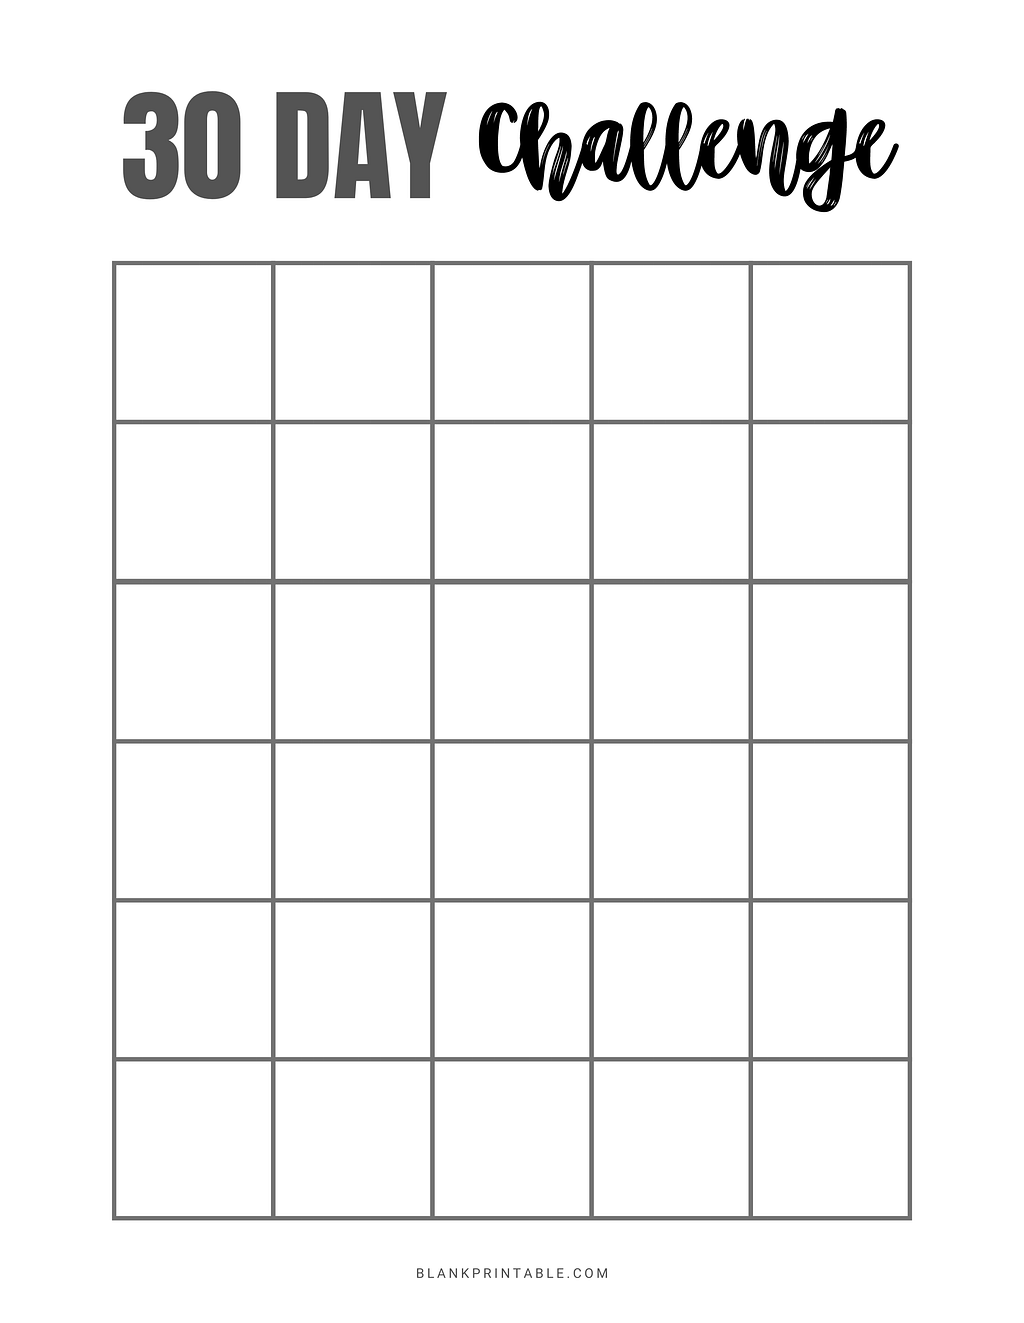 Printable 30 Day Challenge Calendar to track your progress. Blank monthly calendar planner for fitness, habit, goal.